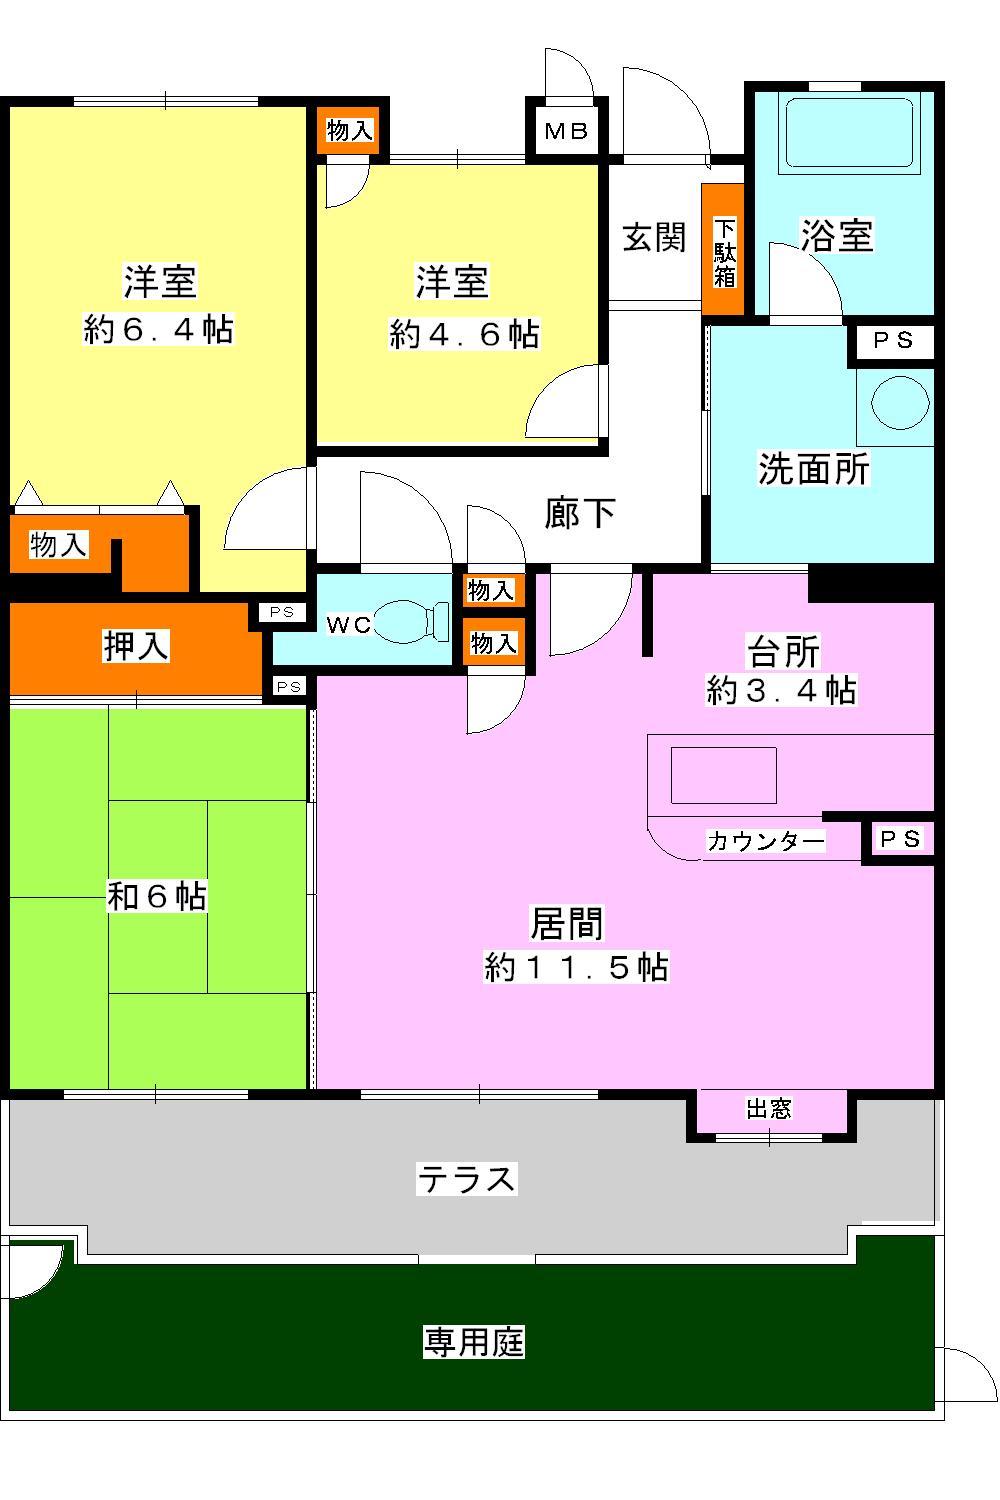 Floor plan. 3LDK, Price 12.9 million yen, Occupied area 67.85 sq m , Balcony area 12.1 sq m